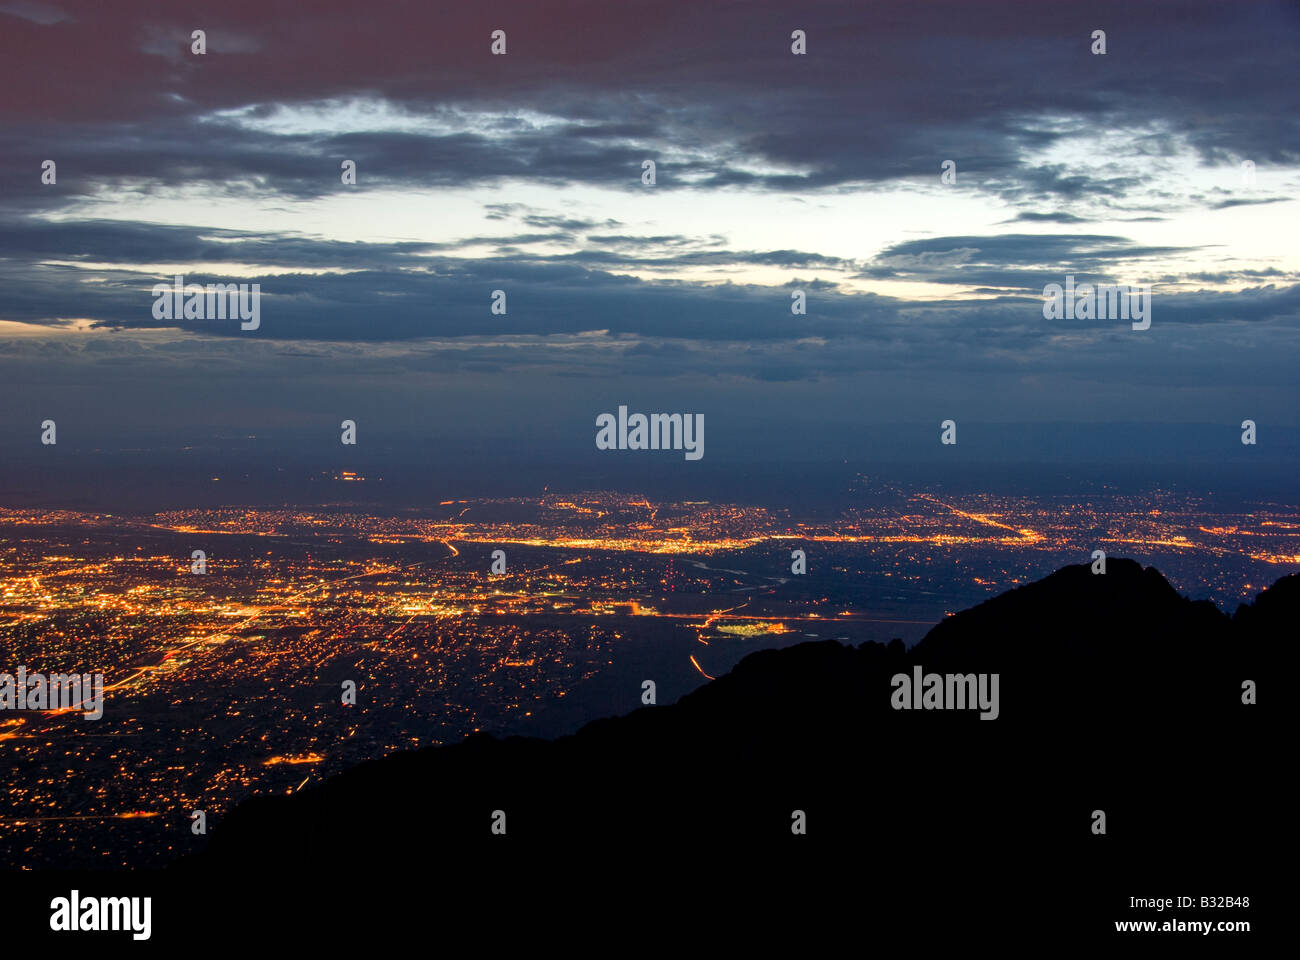 Sandia mountain ridges silhouetted against nighttime Albuquerque city lights Stock Photo